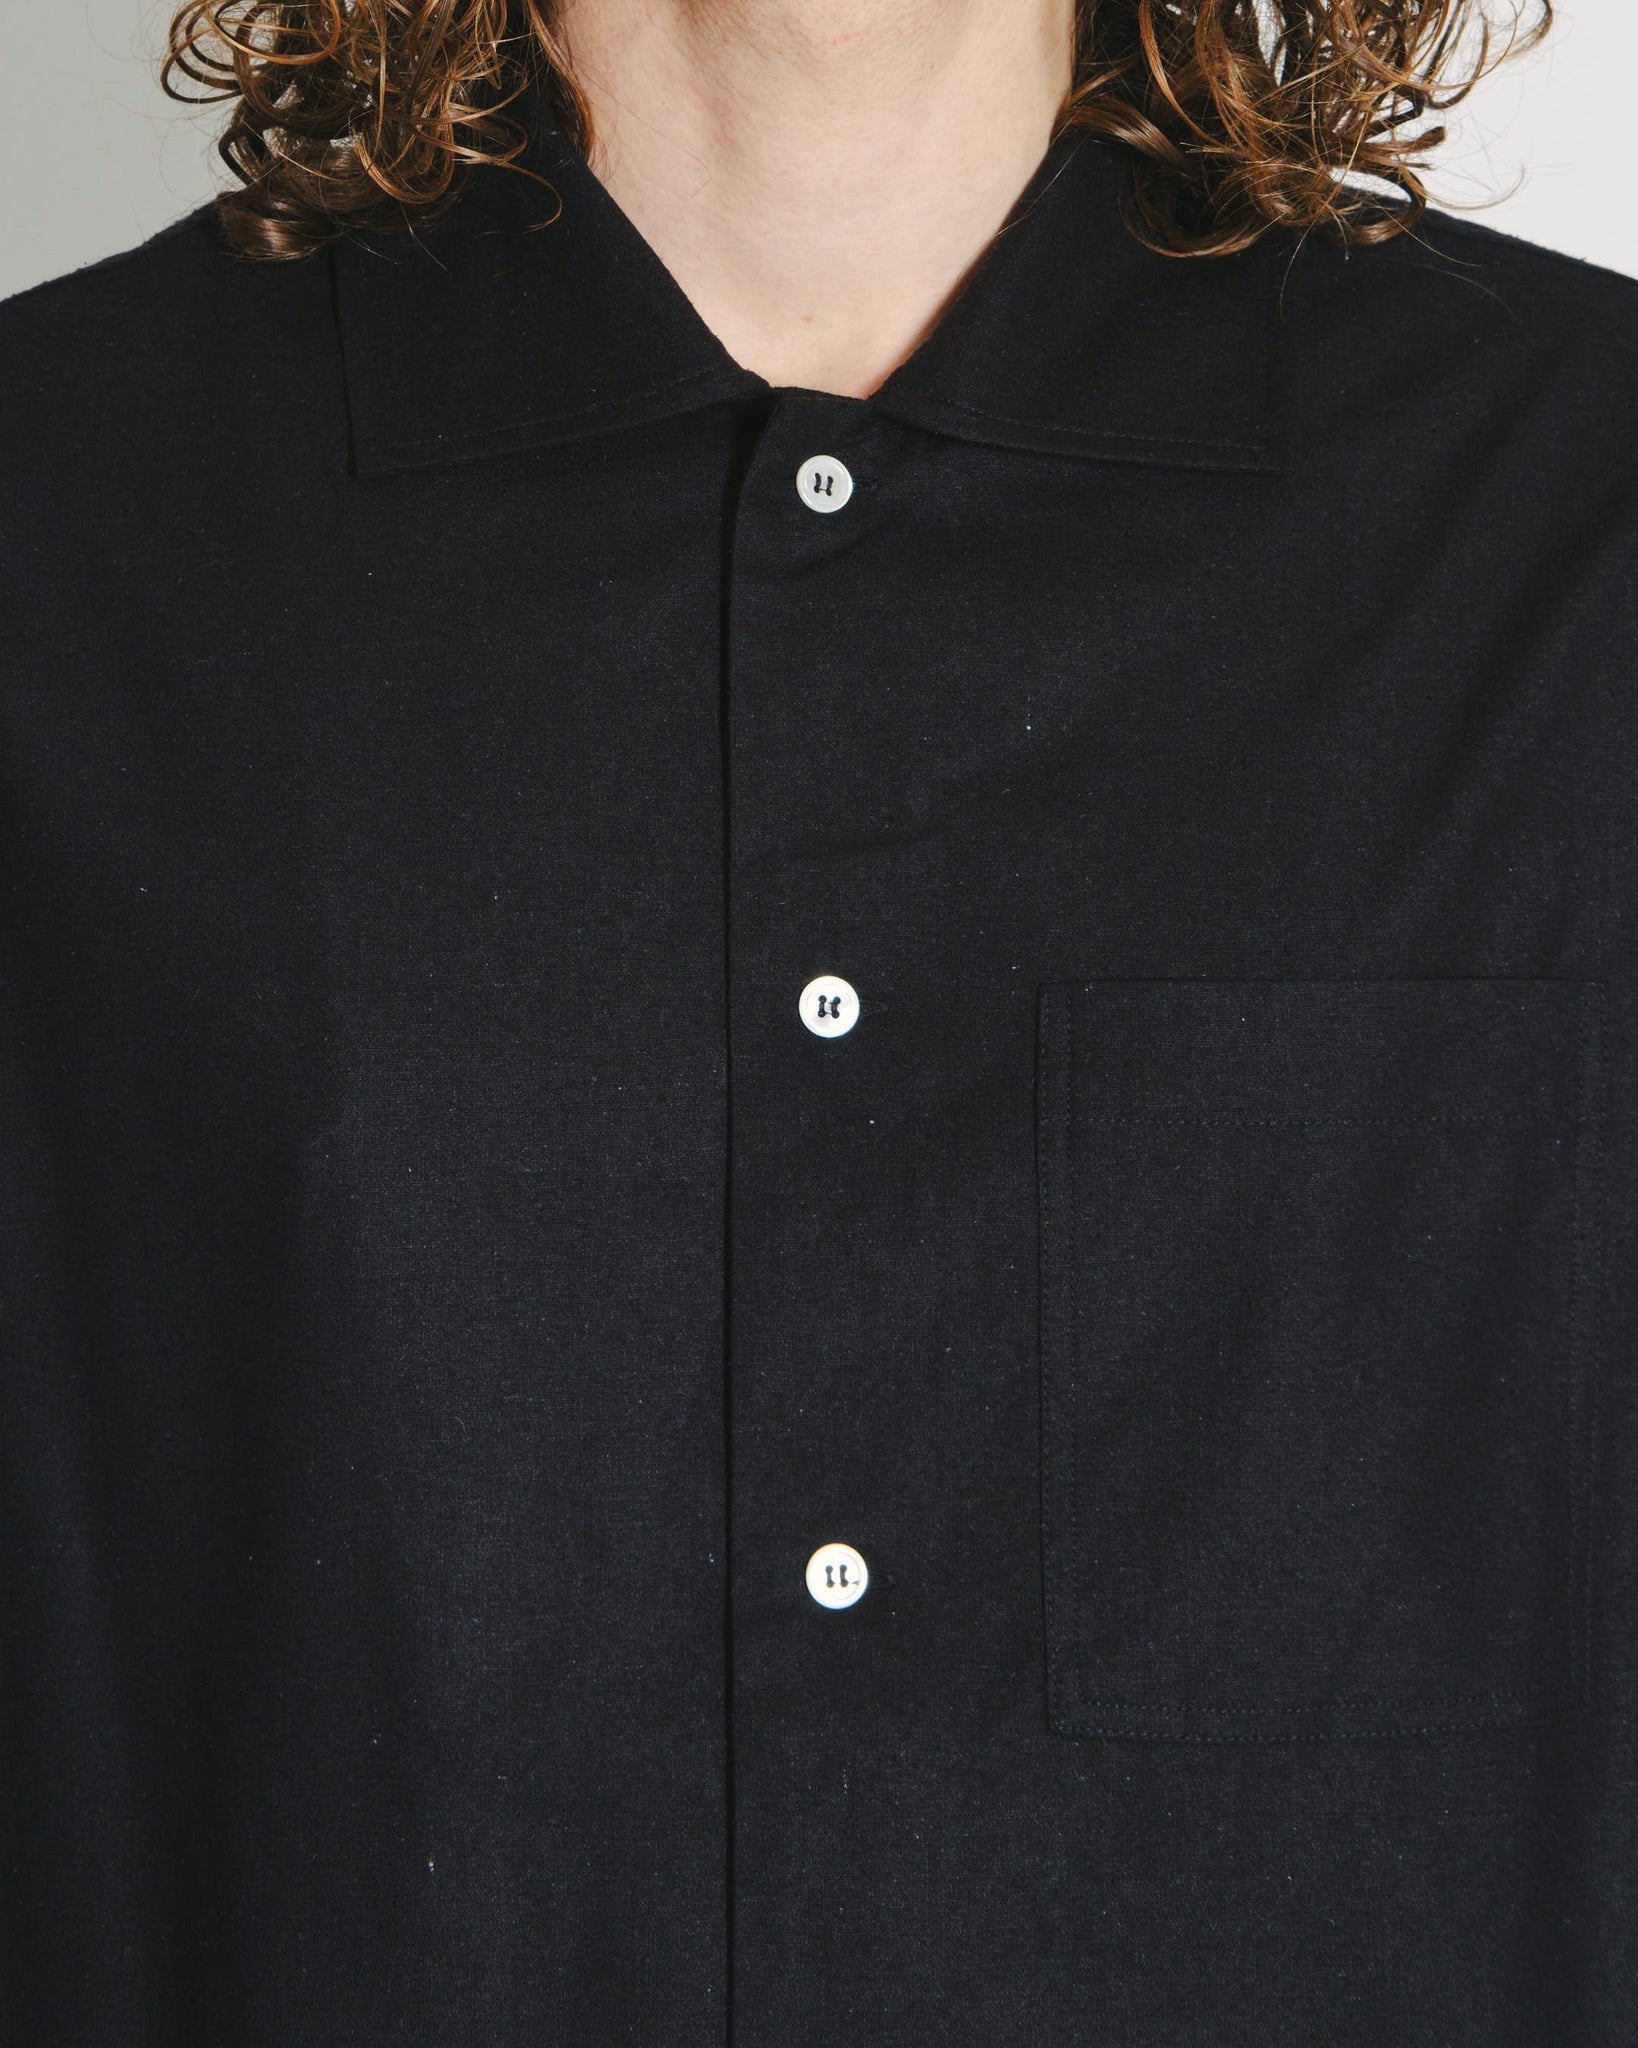 Another Shirt 2.1 - Black